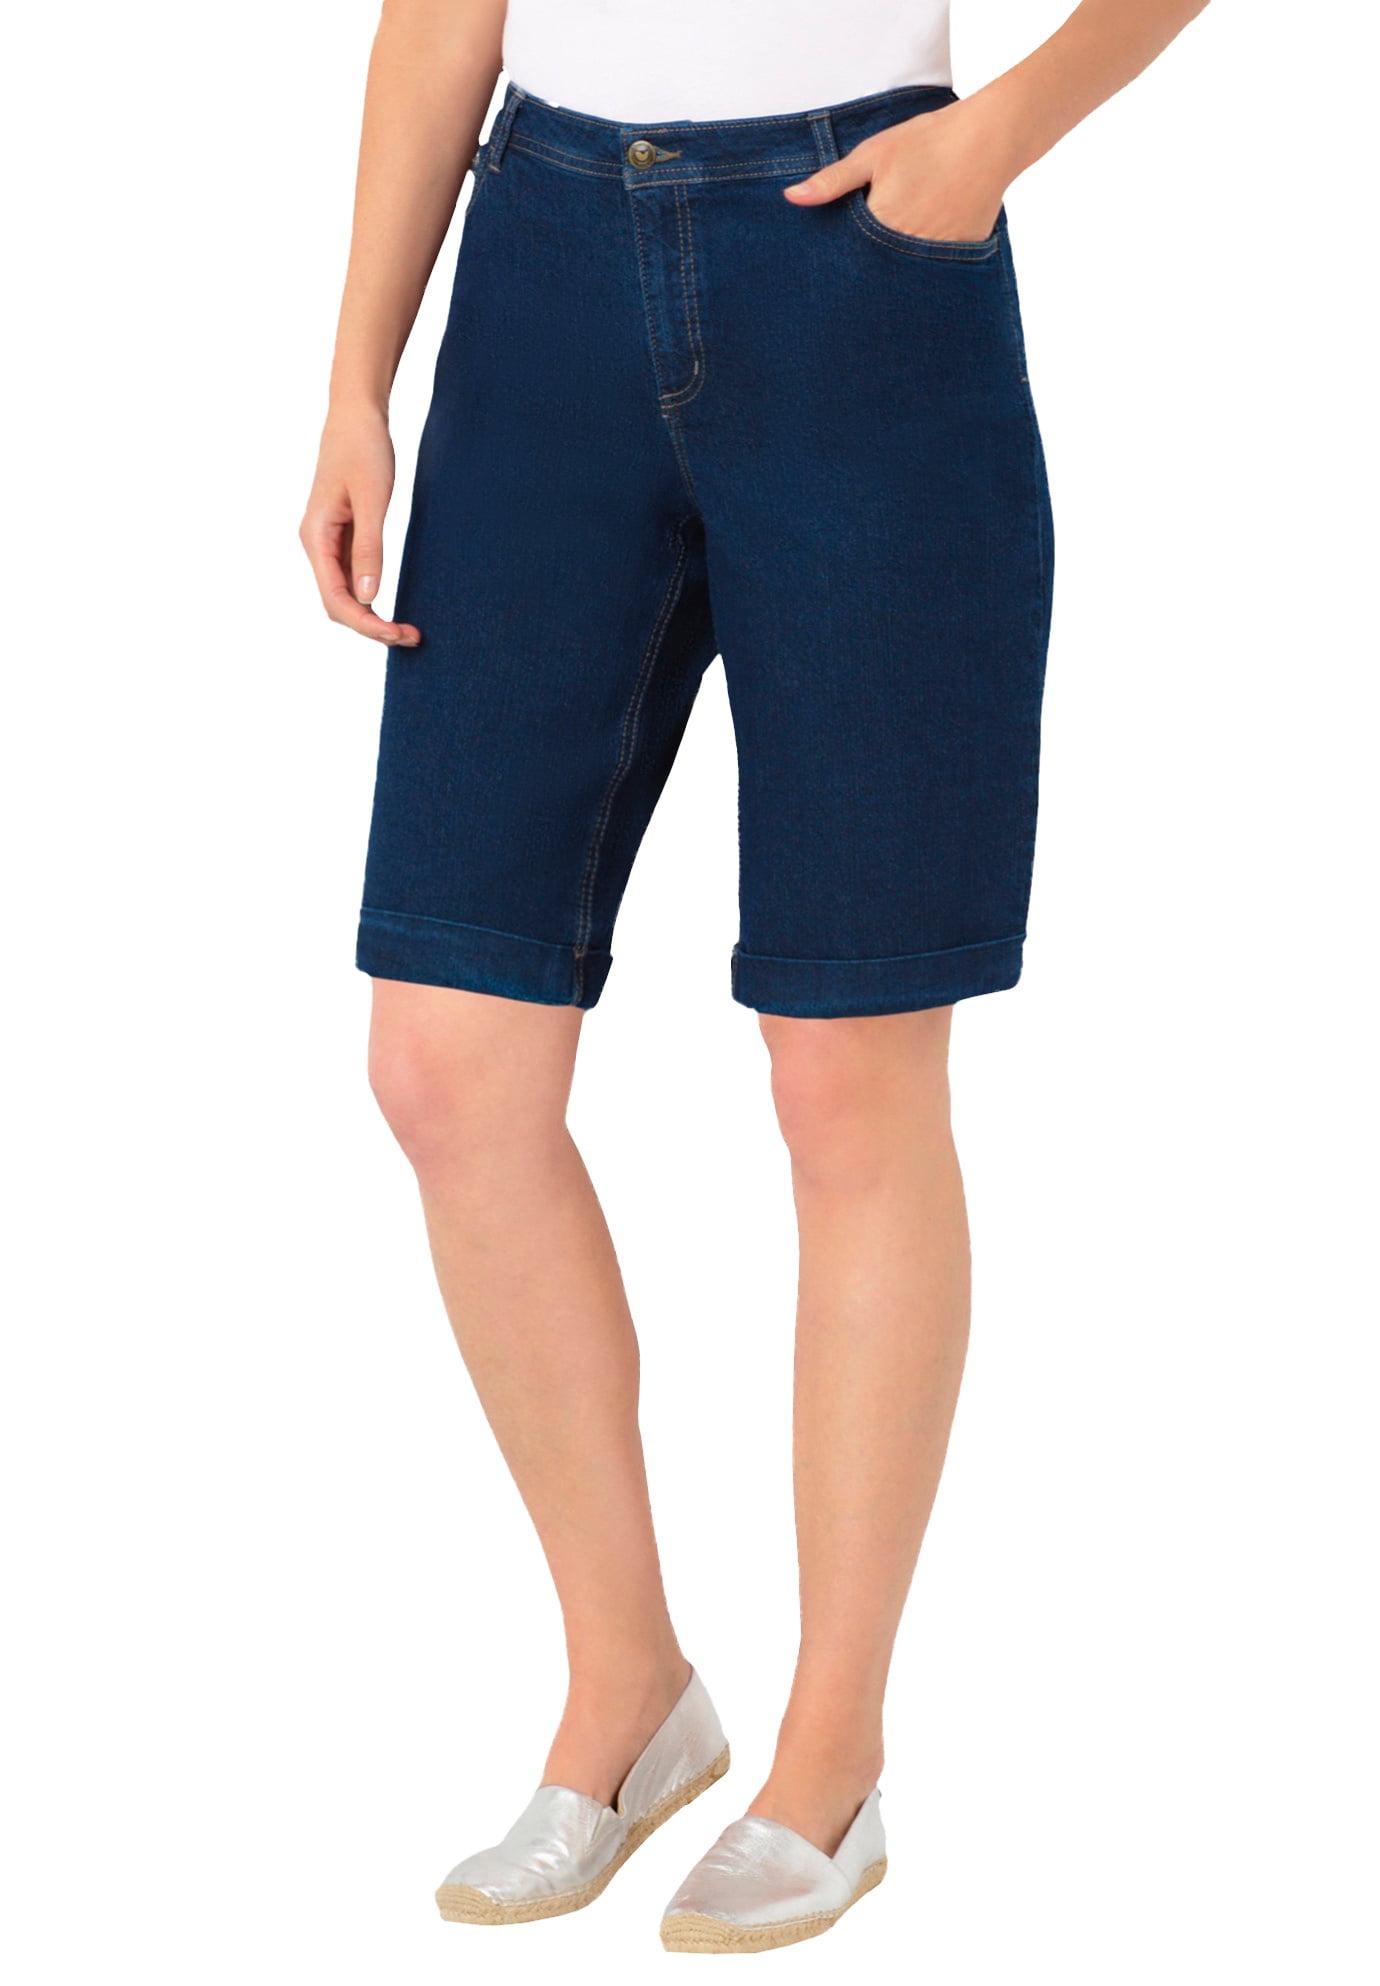 Fseason-Women Bermuda Shorts Plus Size Drawstring Relaxed Cotton Shorts